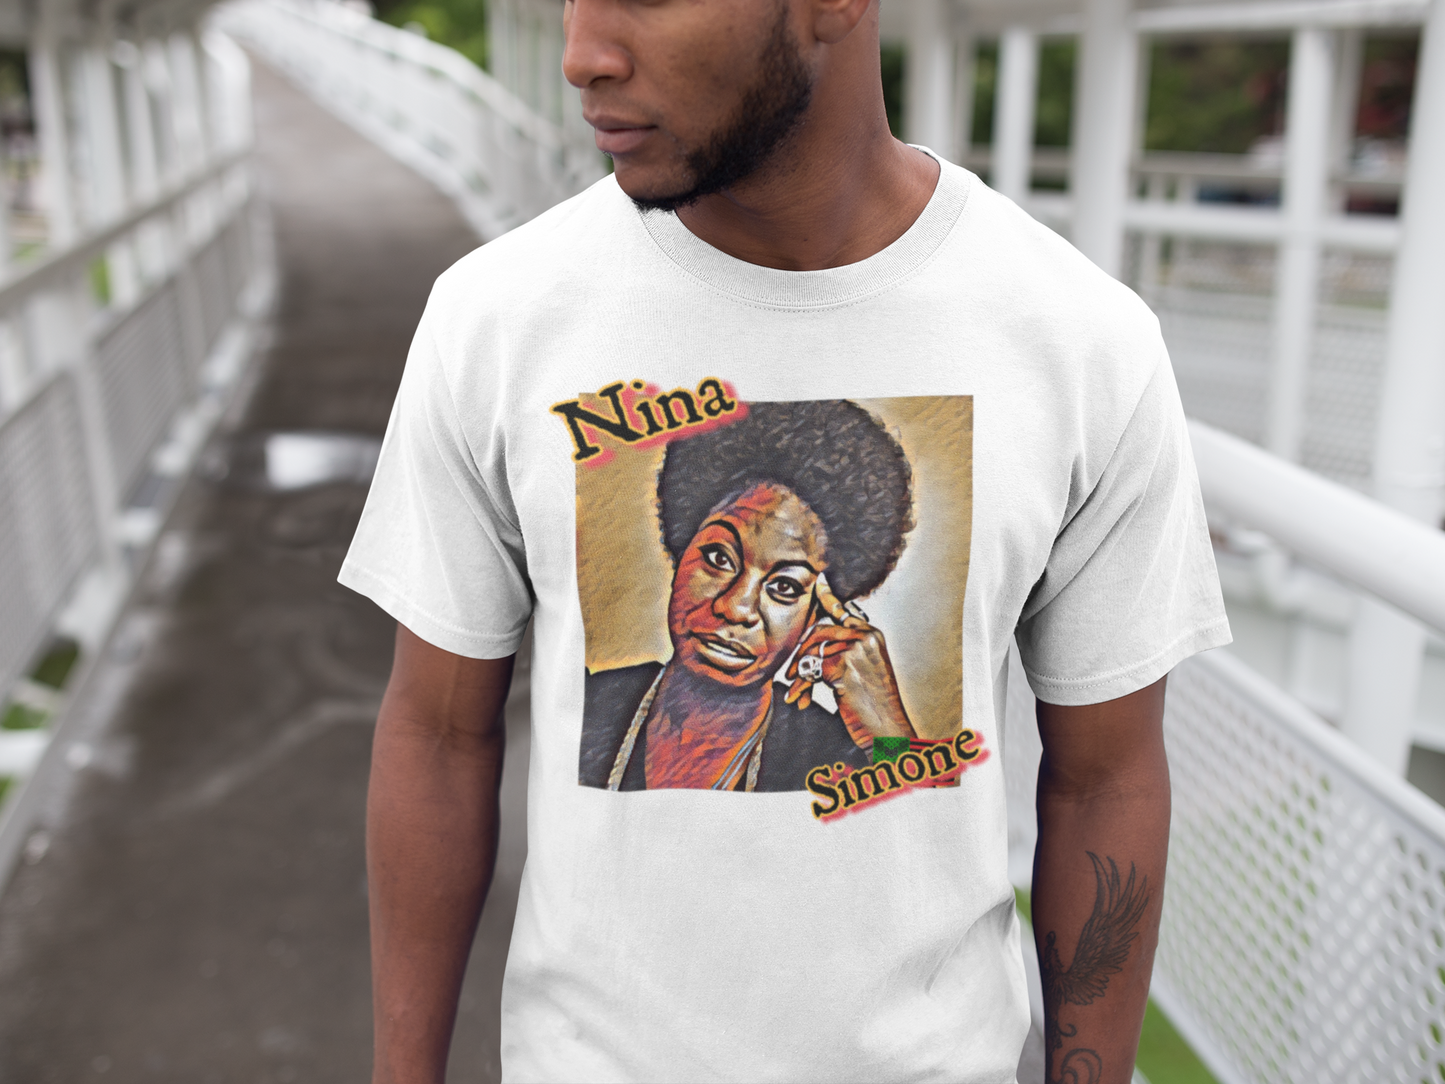 The Quotes - Nina Simone Men's Tee